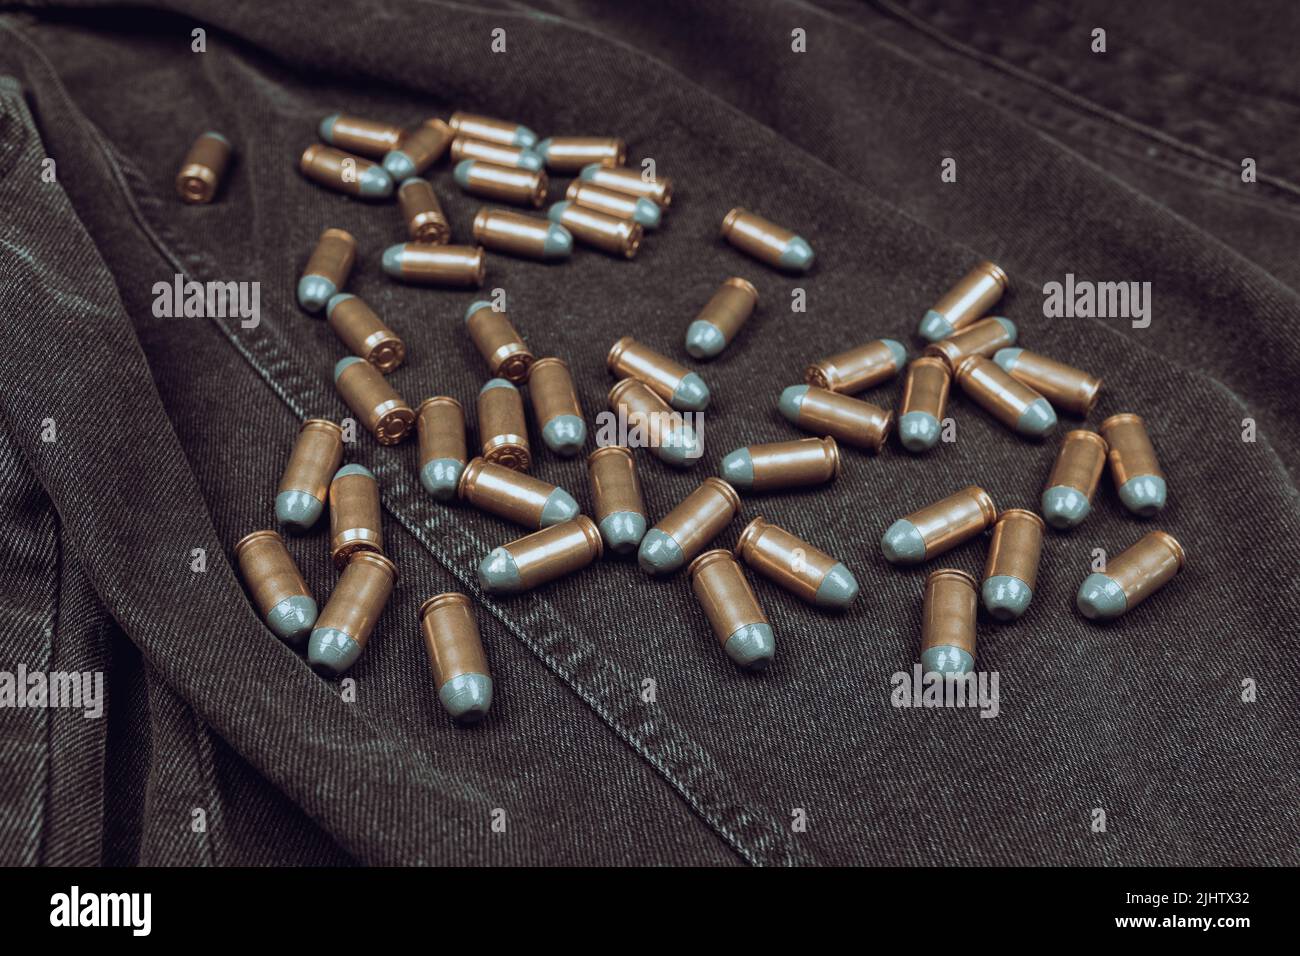 .45 ACP cartridges on a black denim background Stock Photo